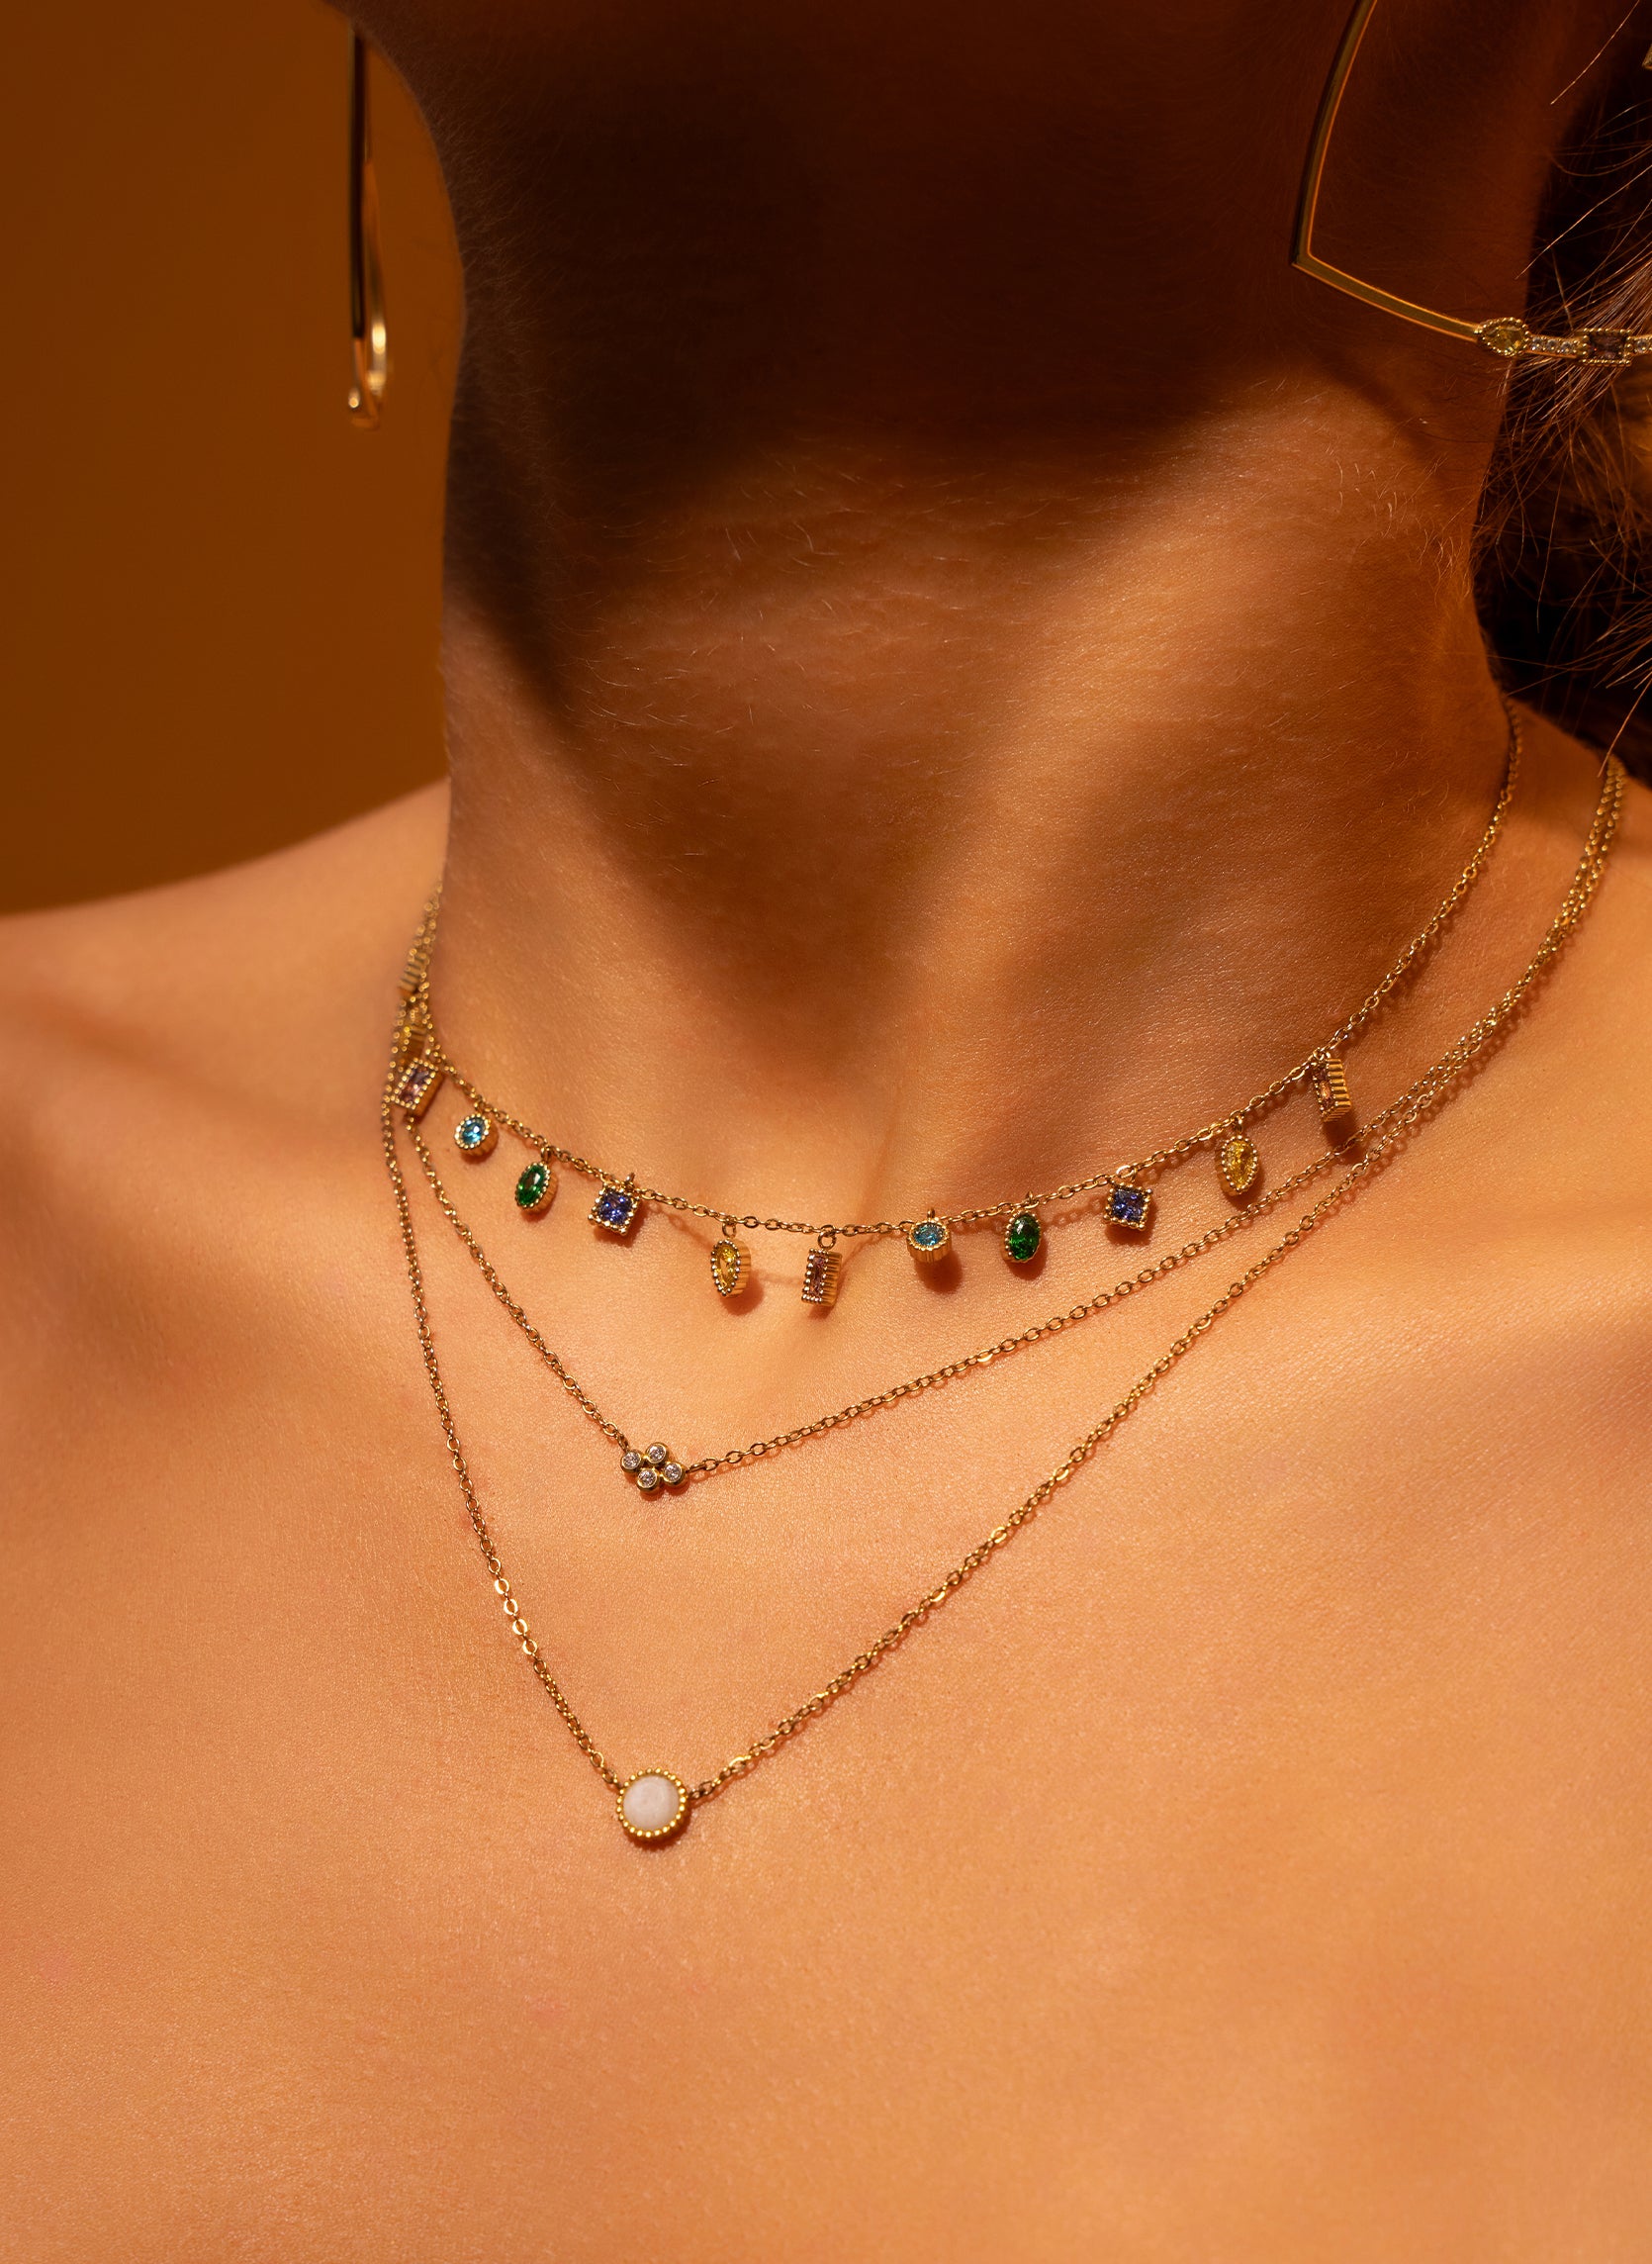 Chain necklace Mohandas